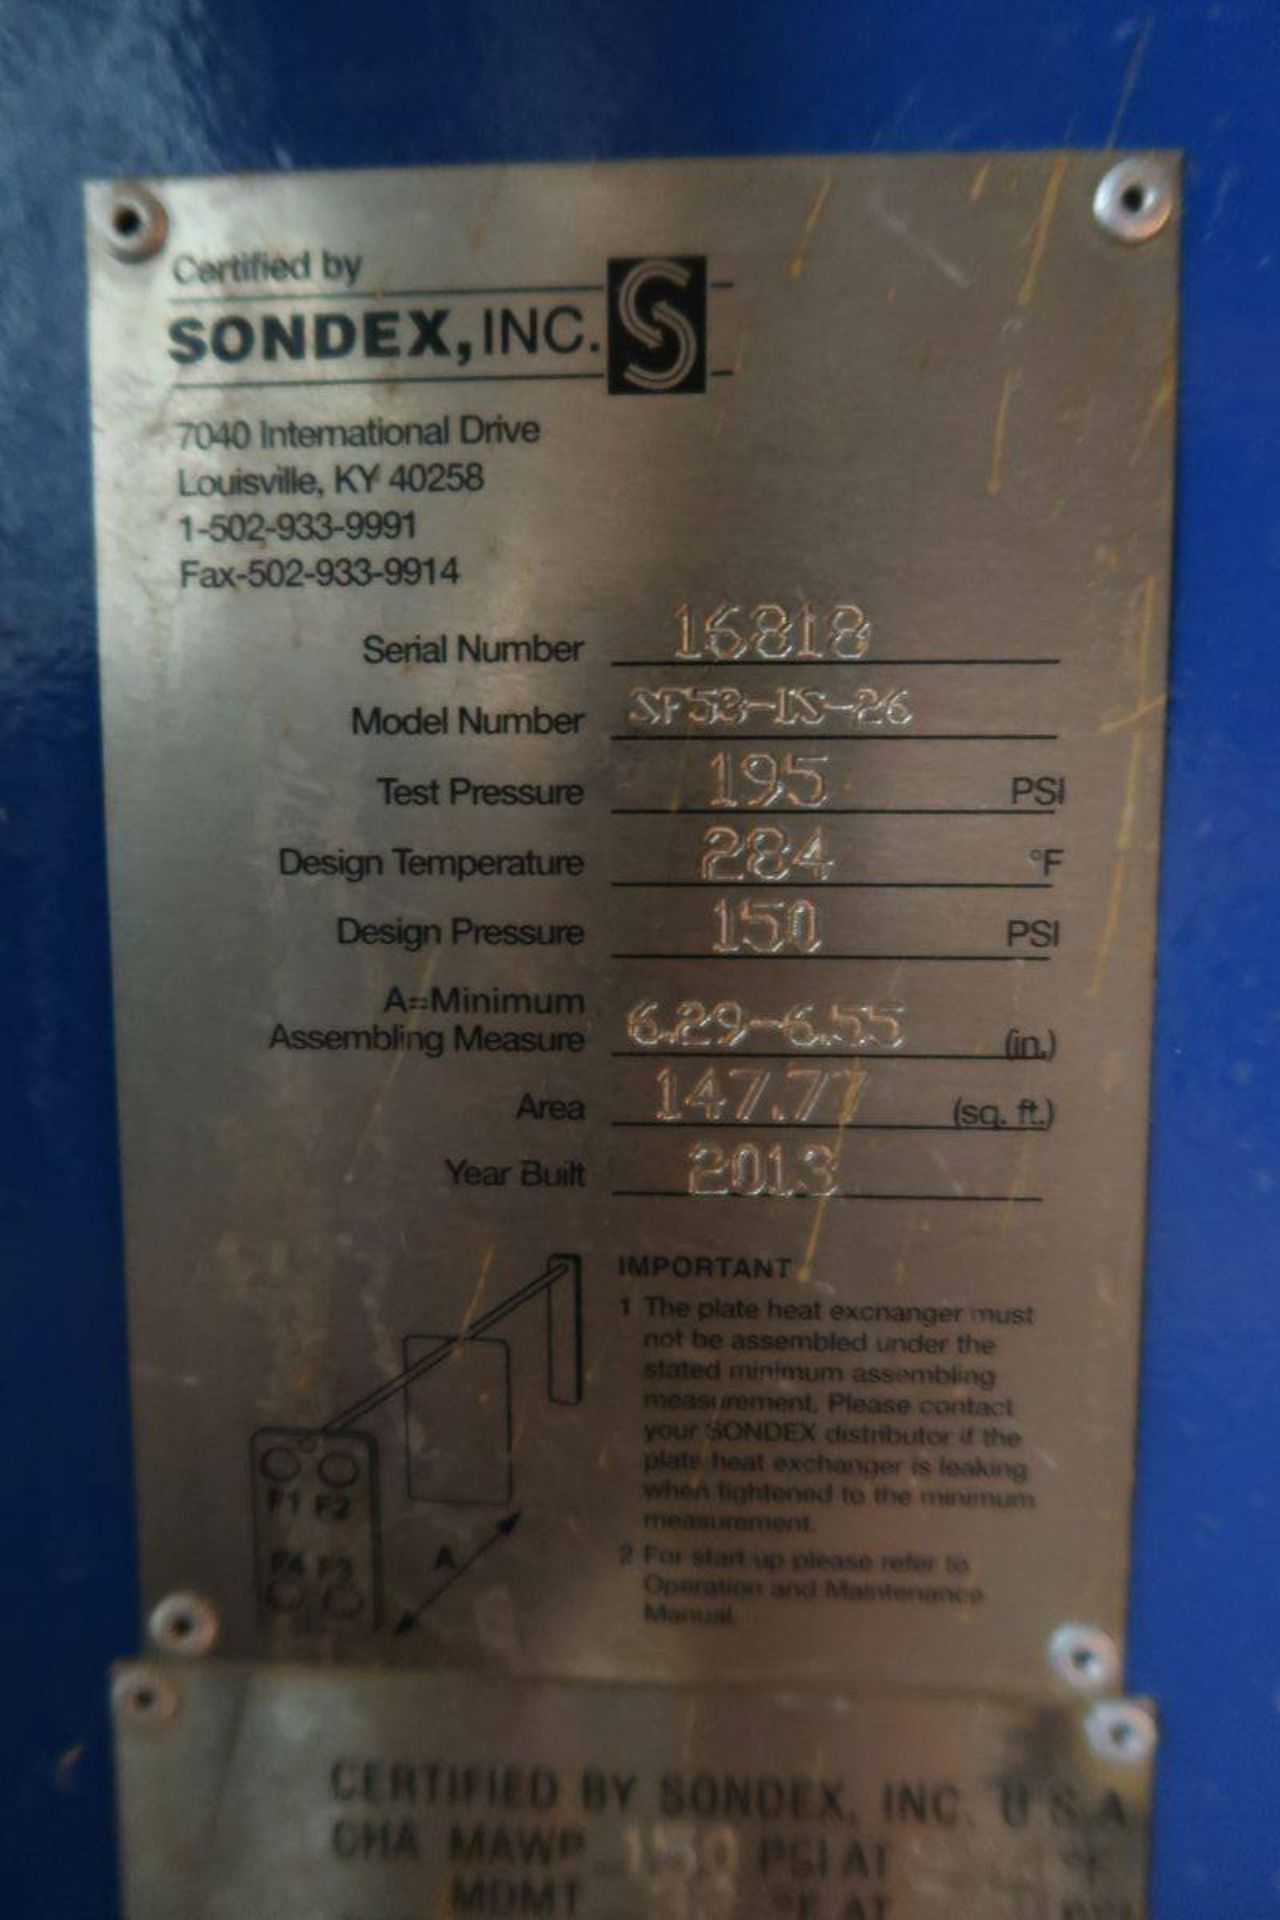 2013 Sondex Inc. SF53-1S-26 Plate Type Heat Exchanger - Image 3 of 4